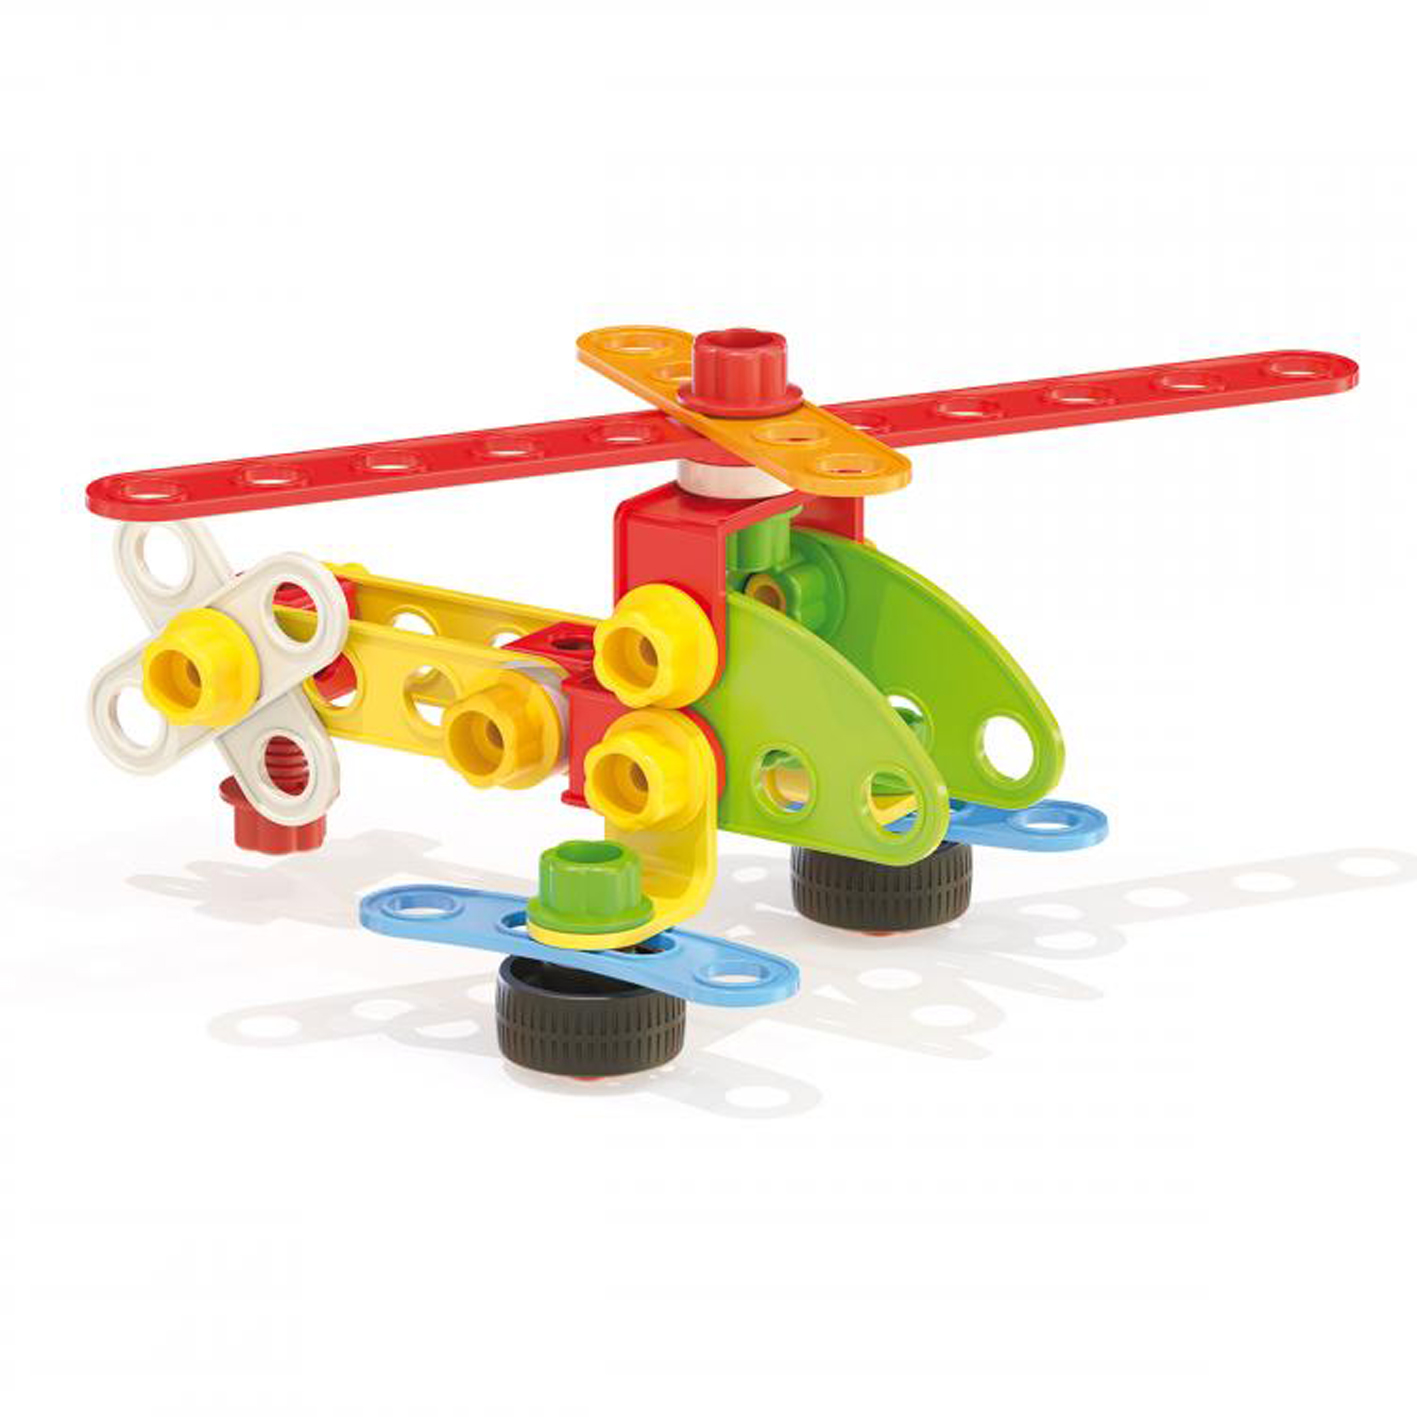 Construction toys quercetti kreativt kit tecno jumbo